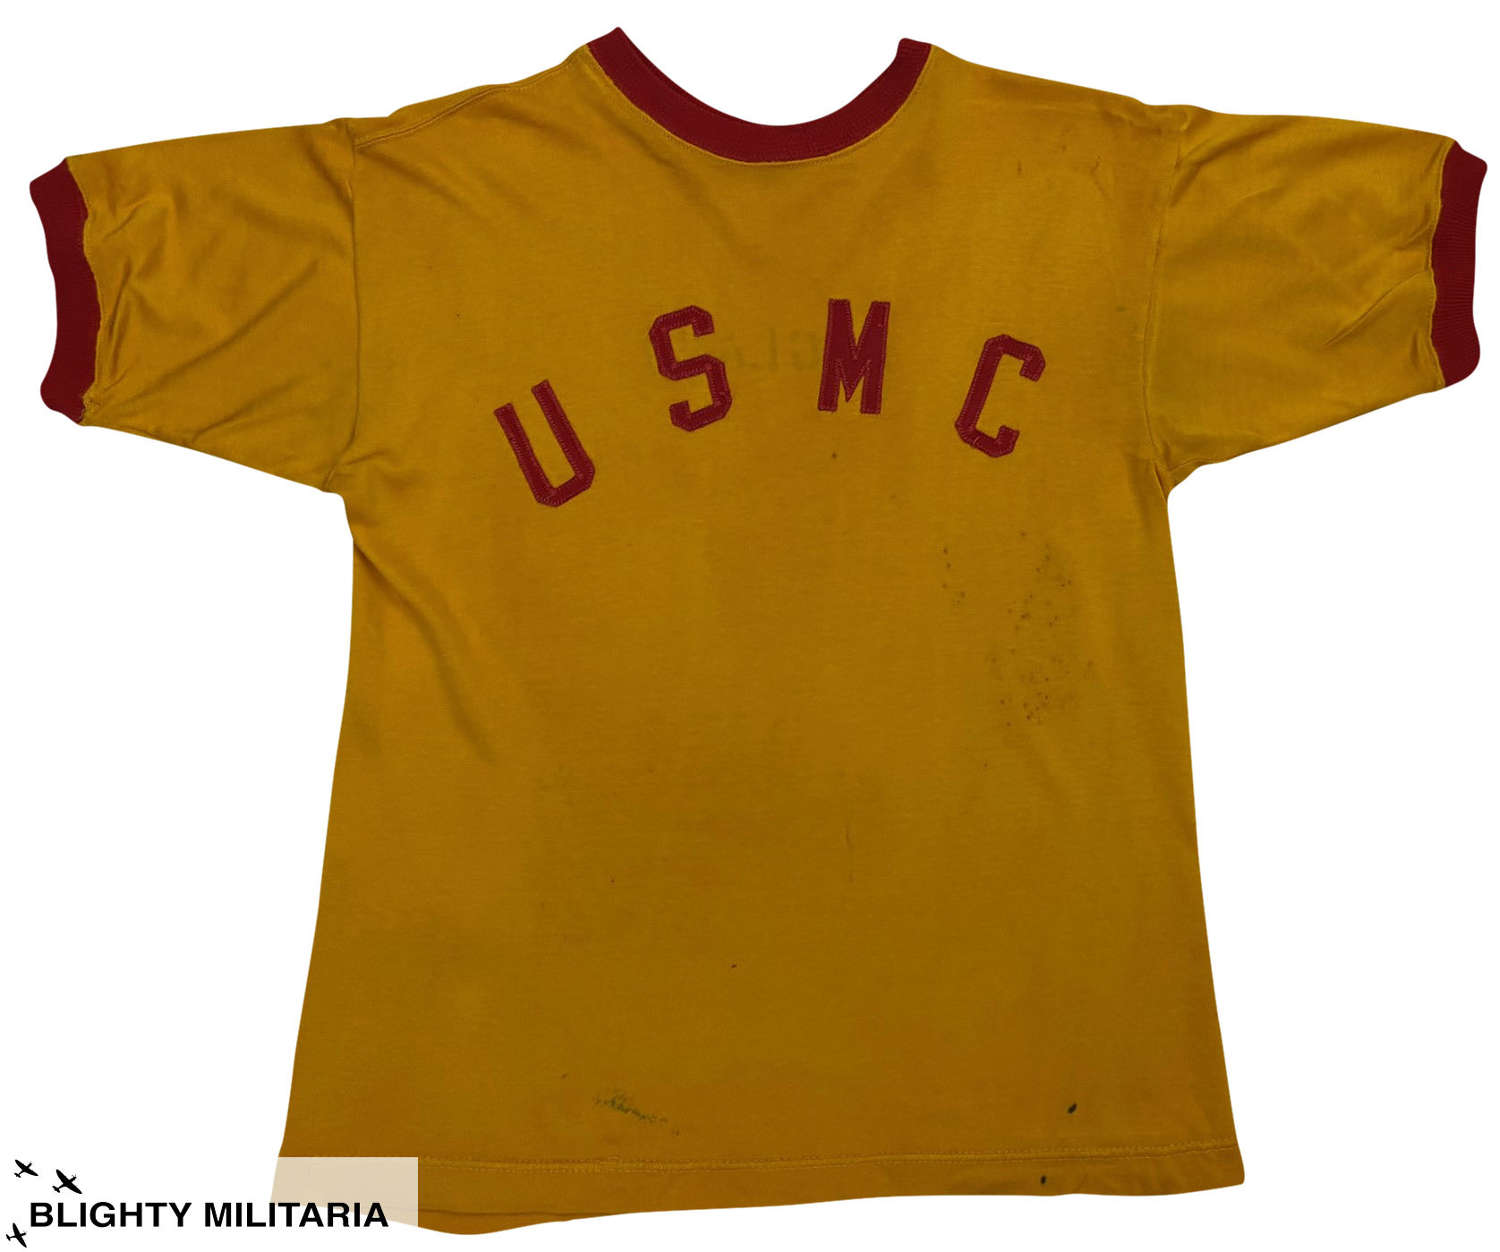 Original 1950s USMC Yellow Sports Top